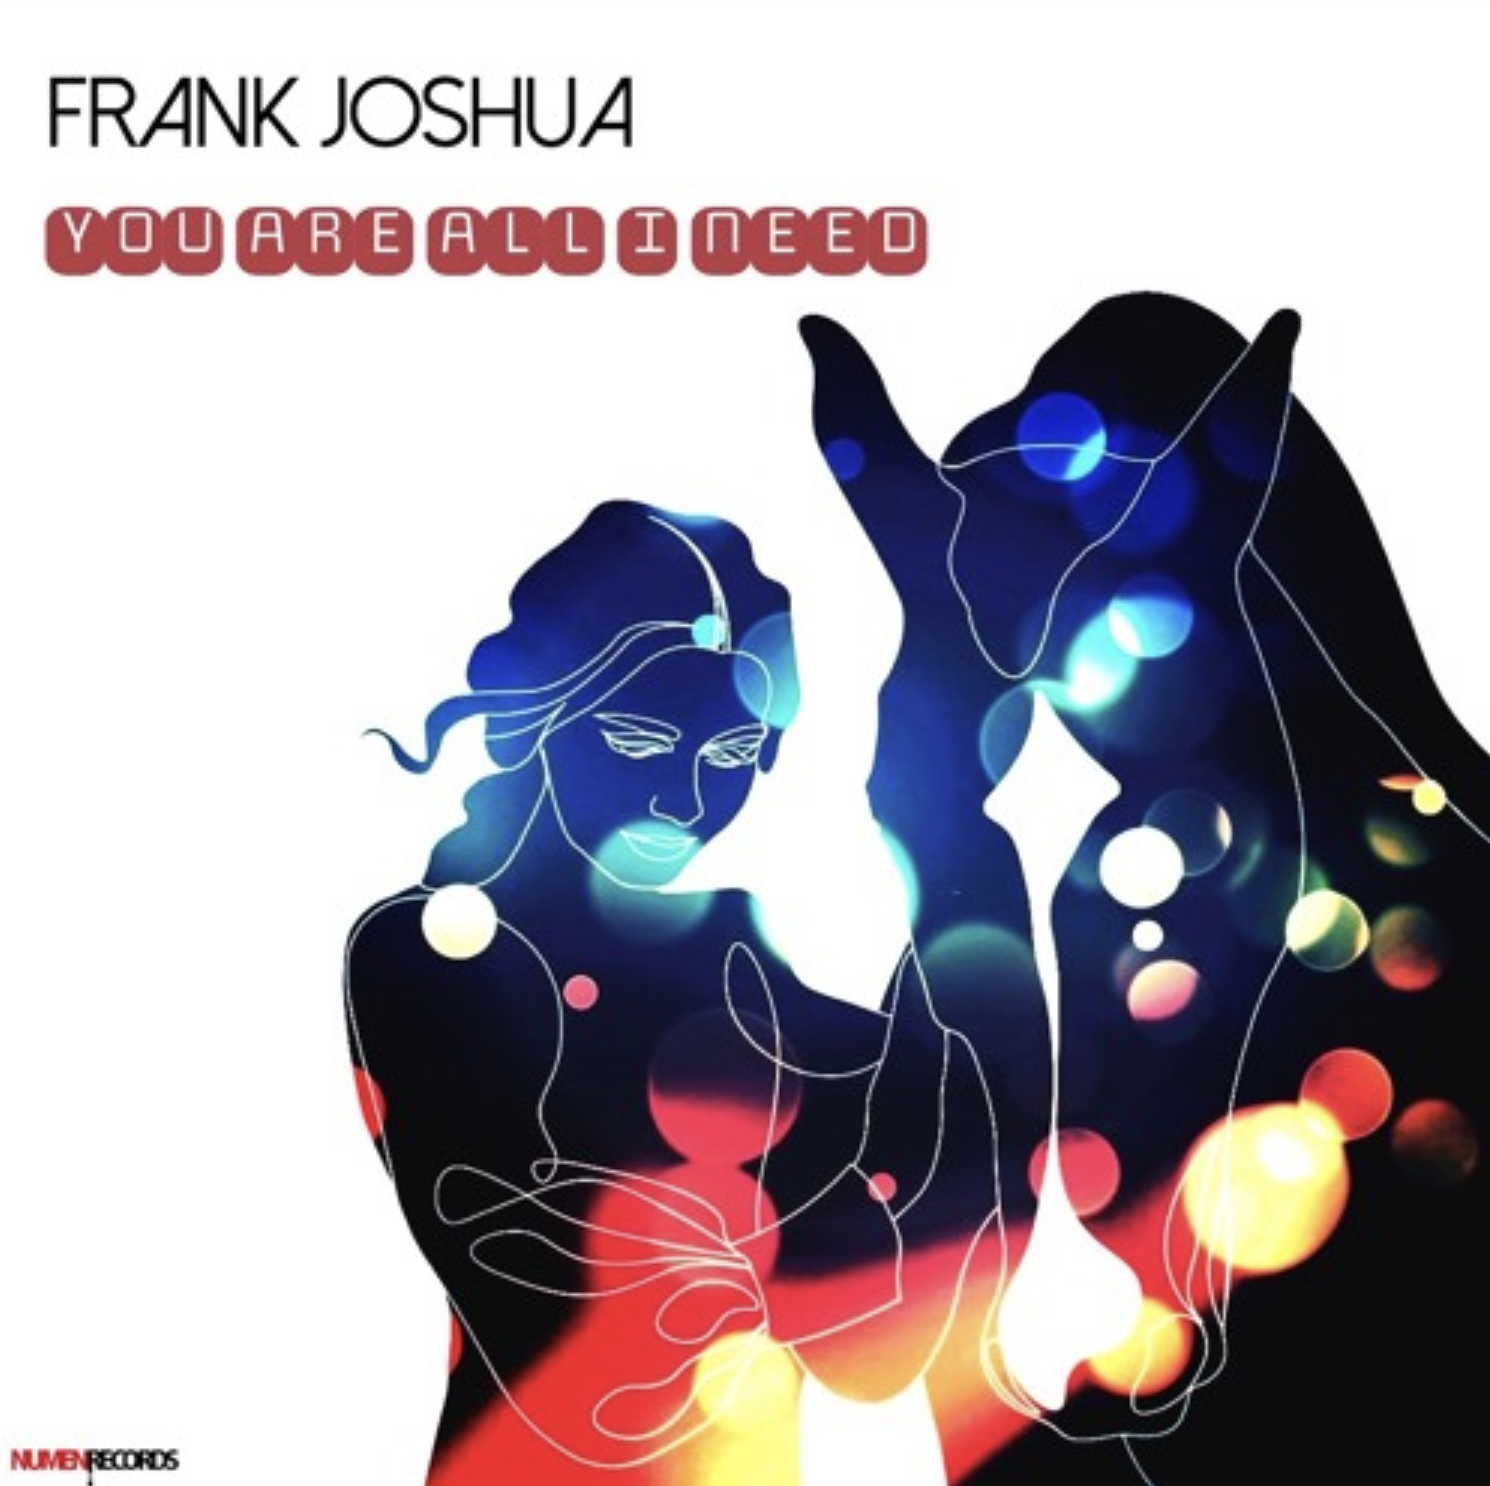 Frank Joshua’s marvelous new single “You Are All I Need”